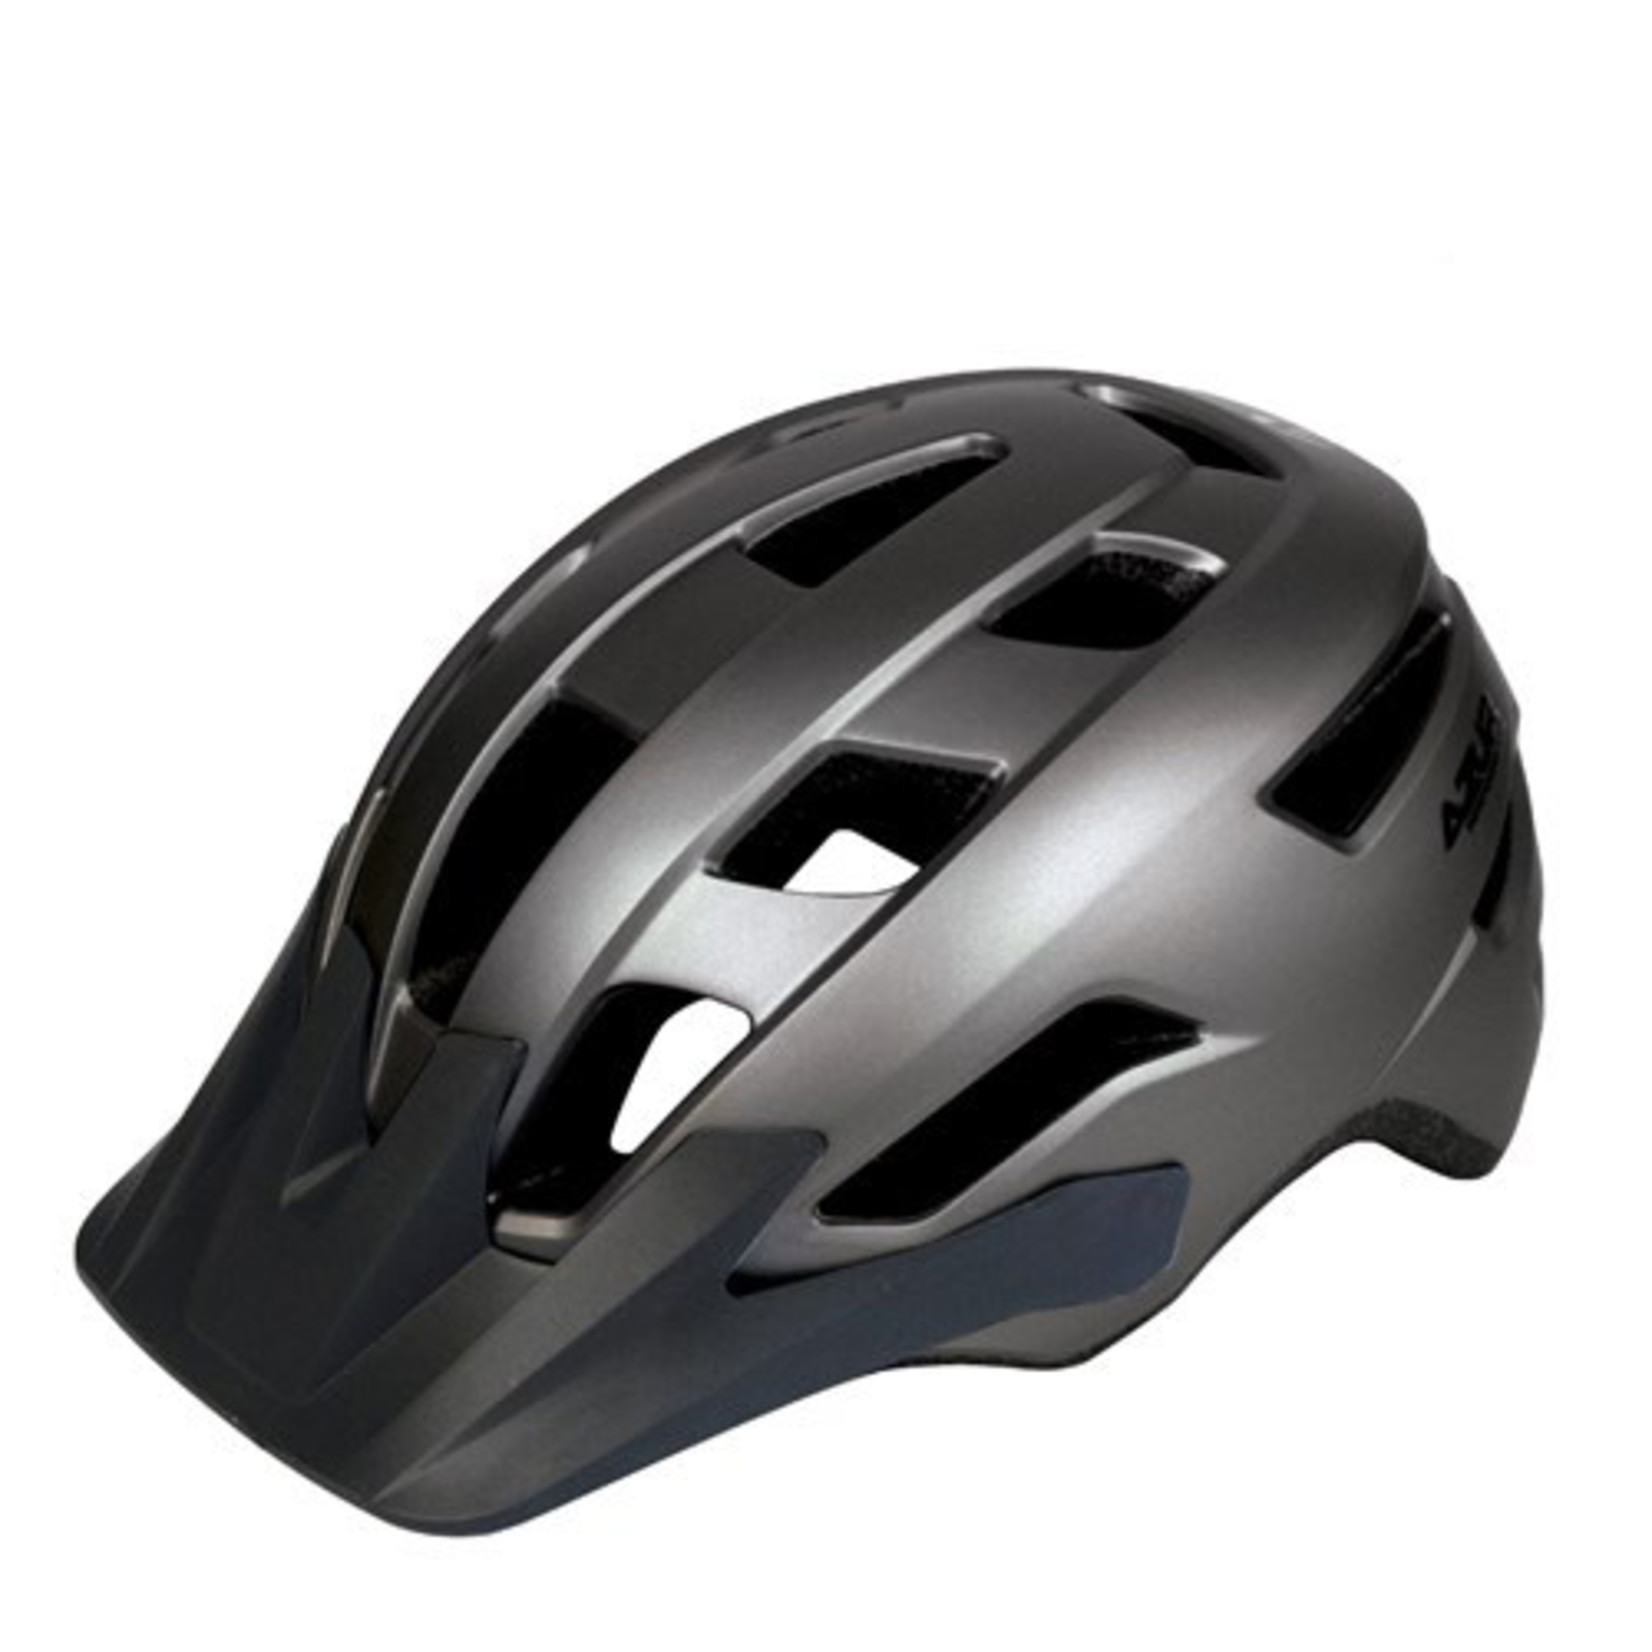 Azur Azur L80 Bike Helmet - Titanium Lightweight In-Mould Shell Washable Pads